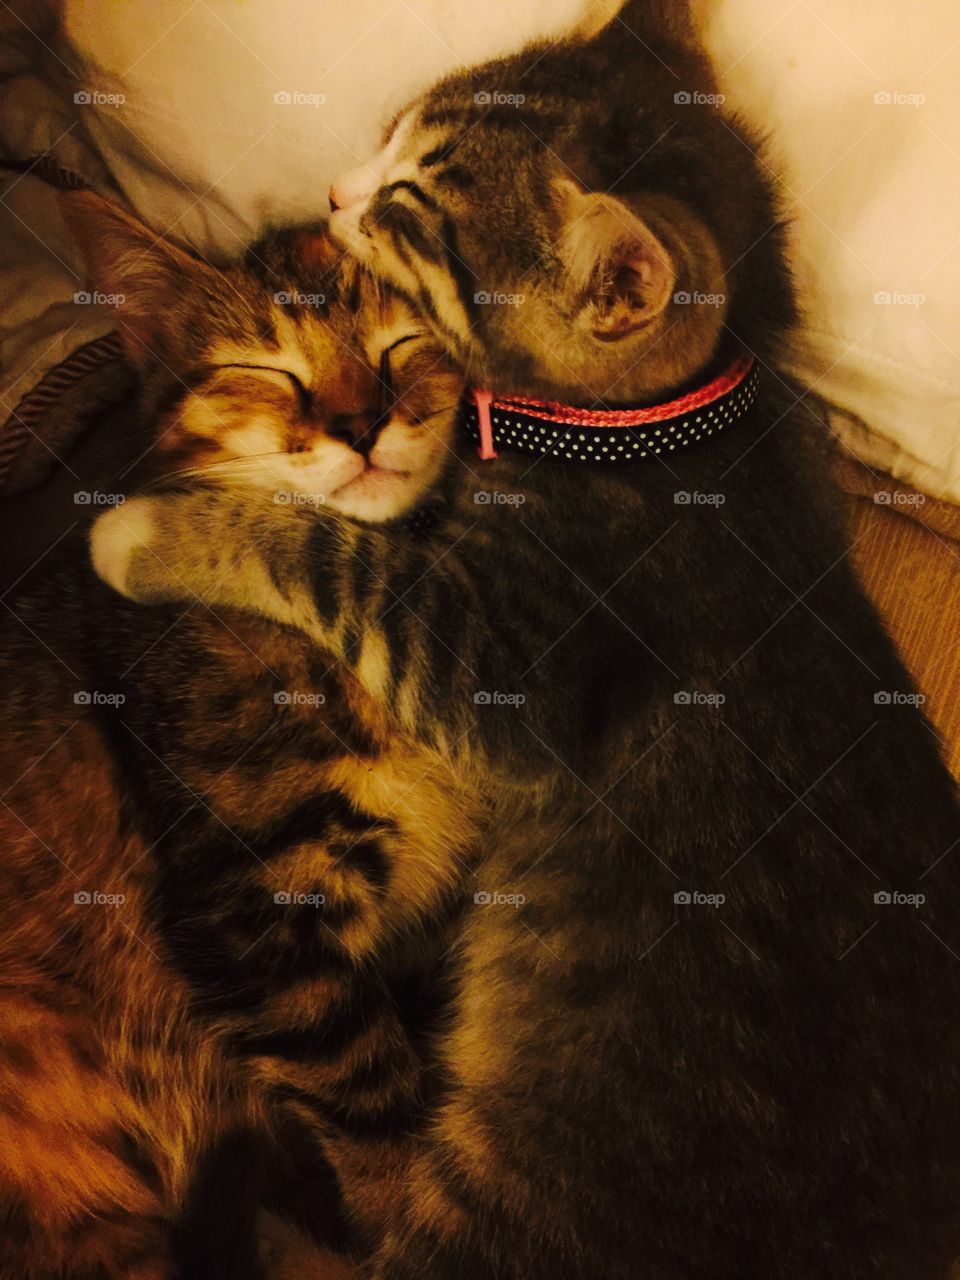 Two sleeping kitten